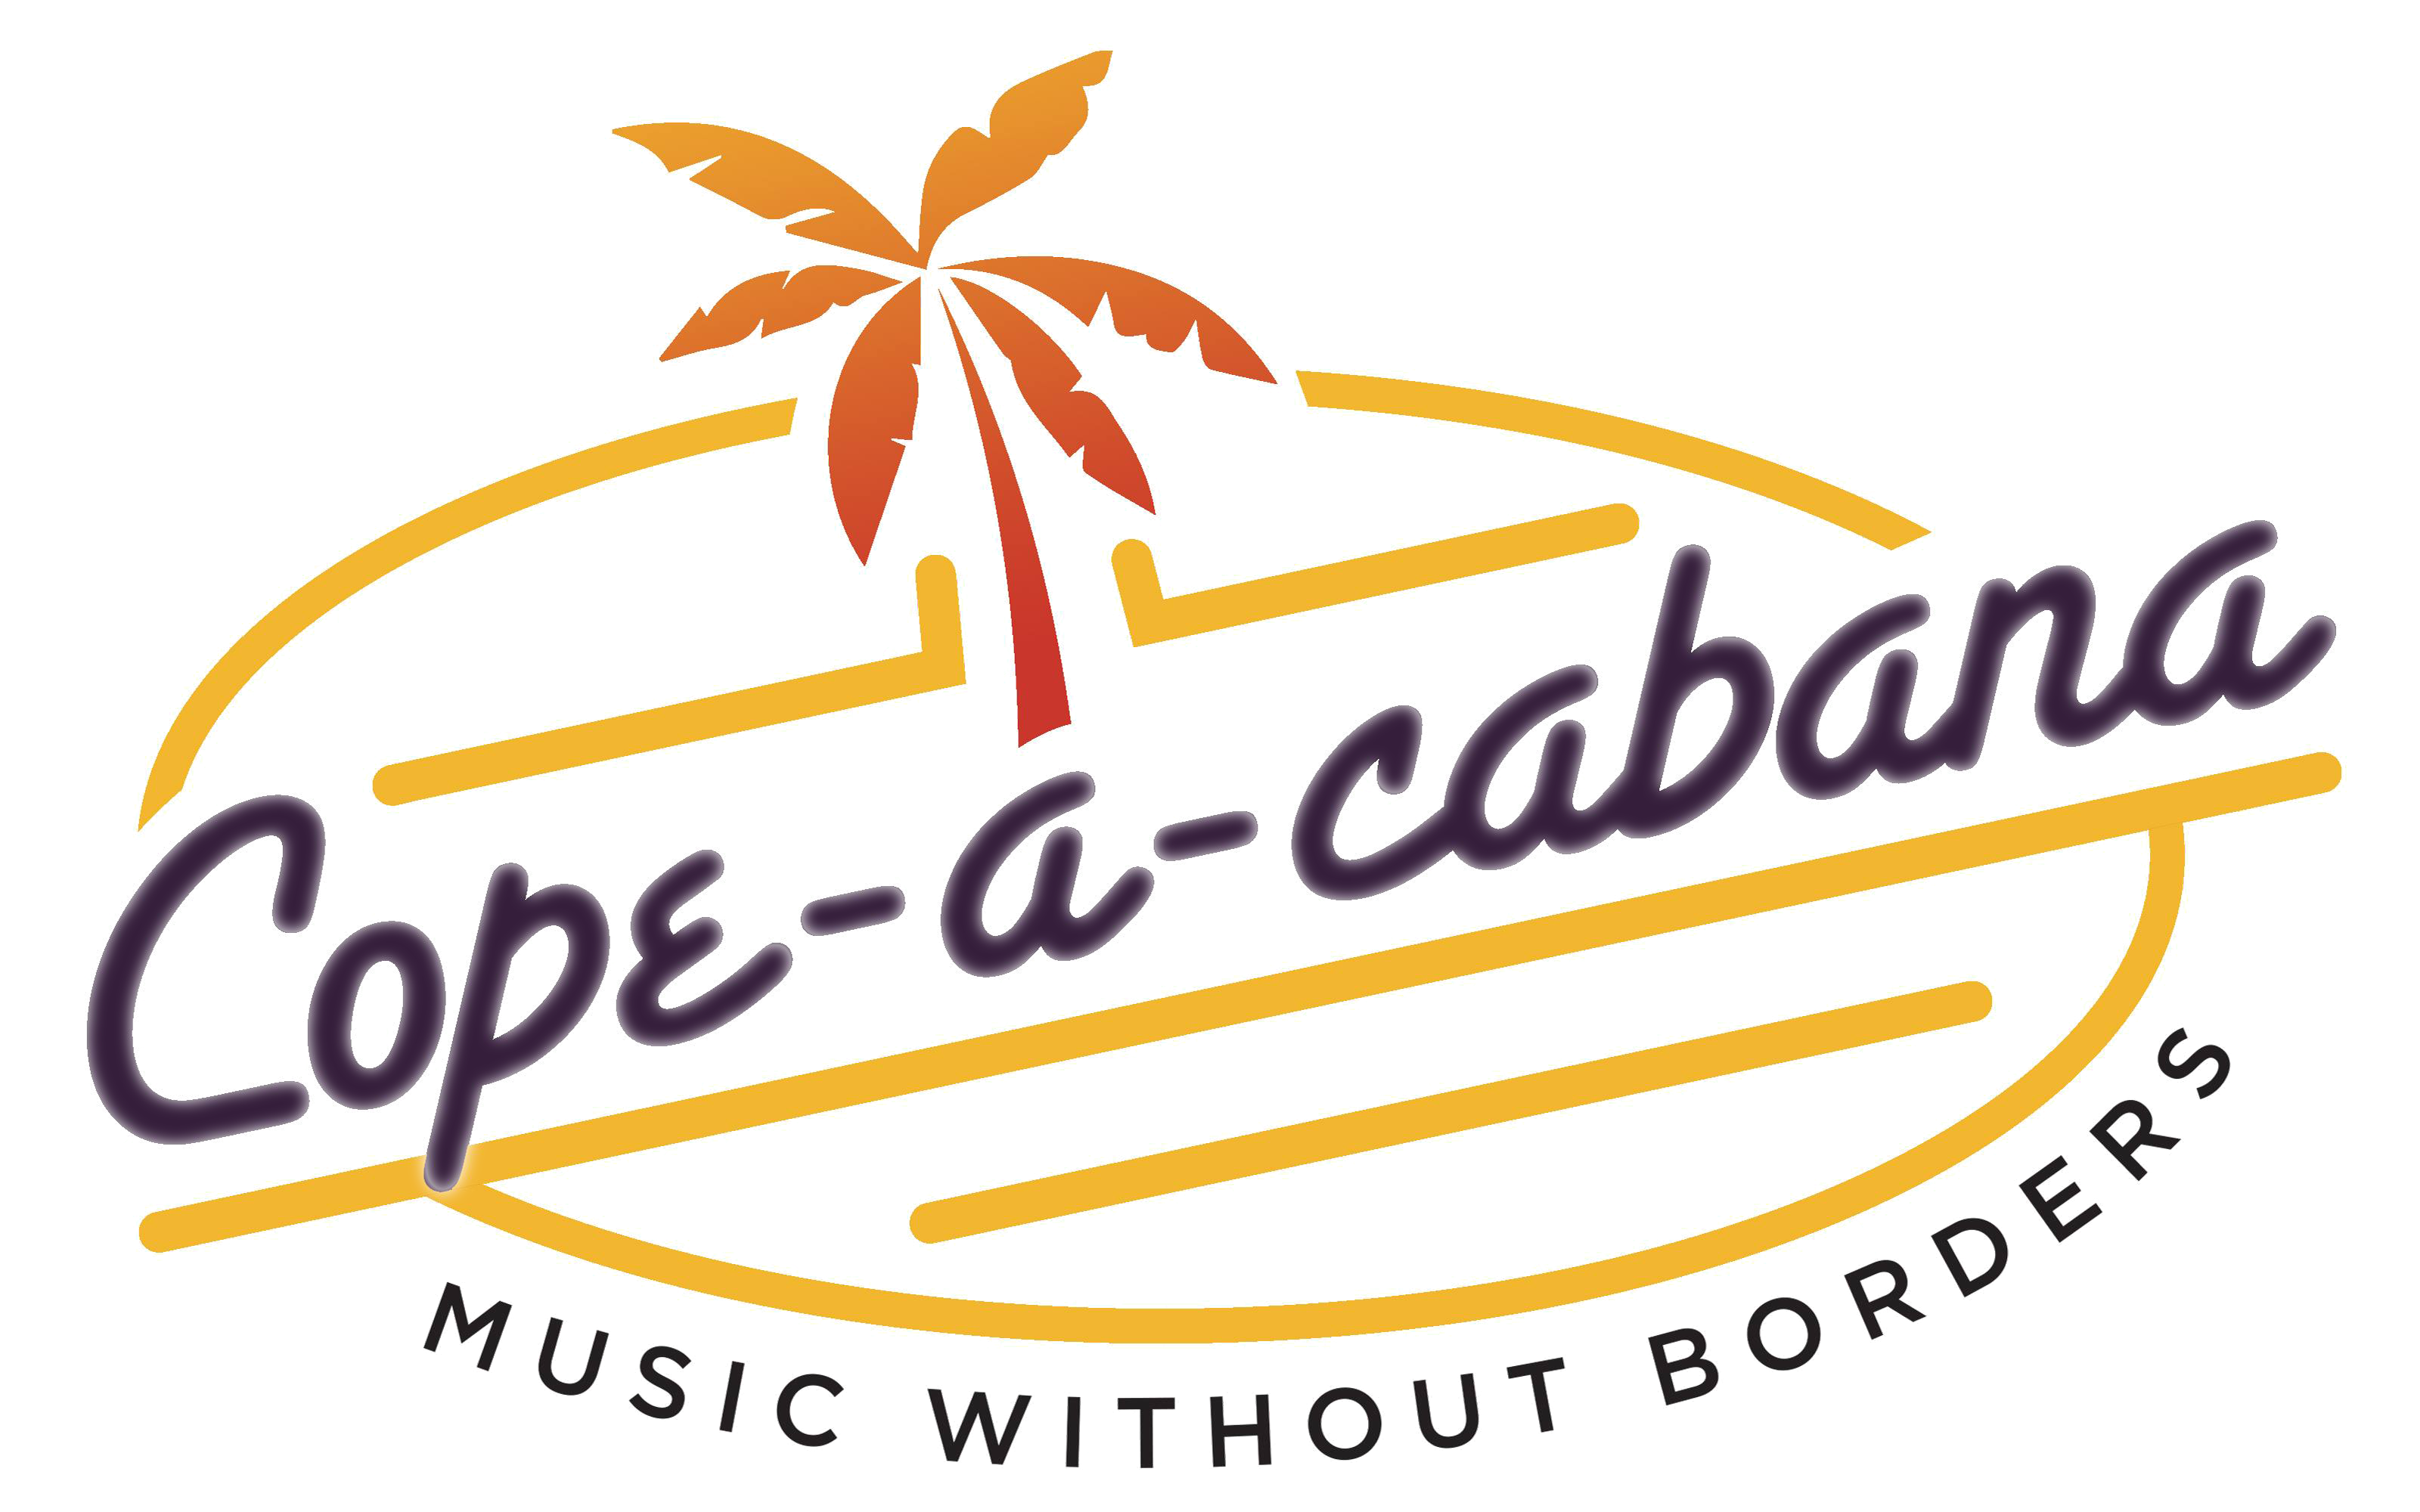 Cope-a-cabana Logo